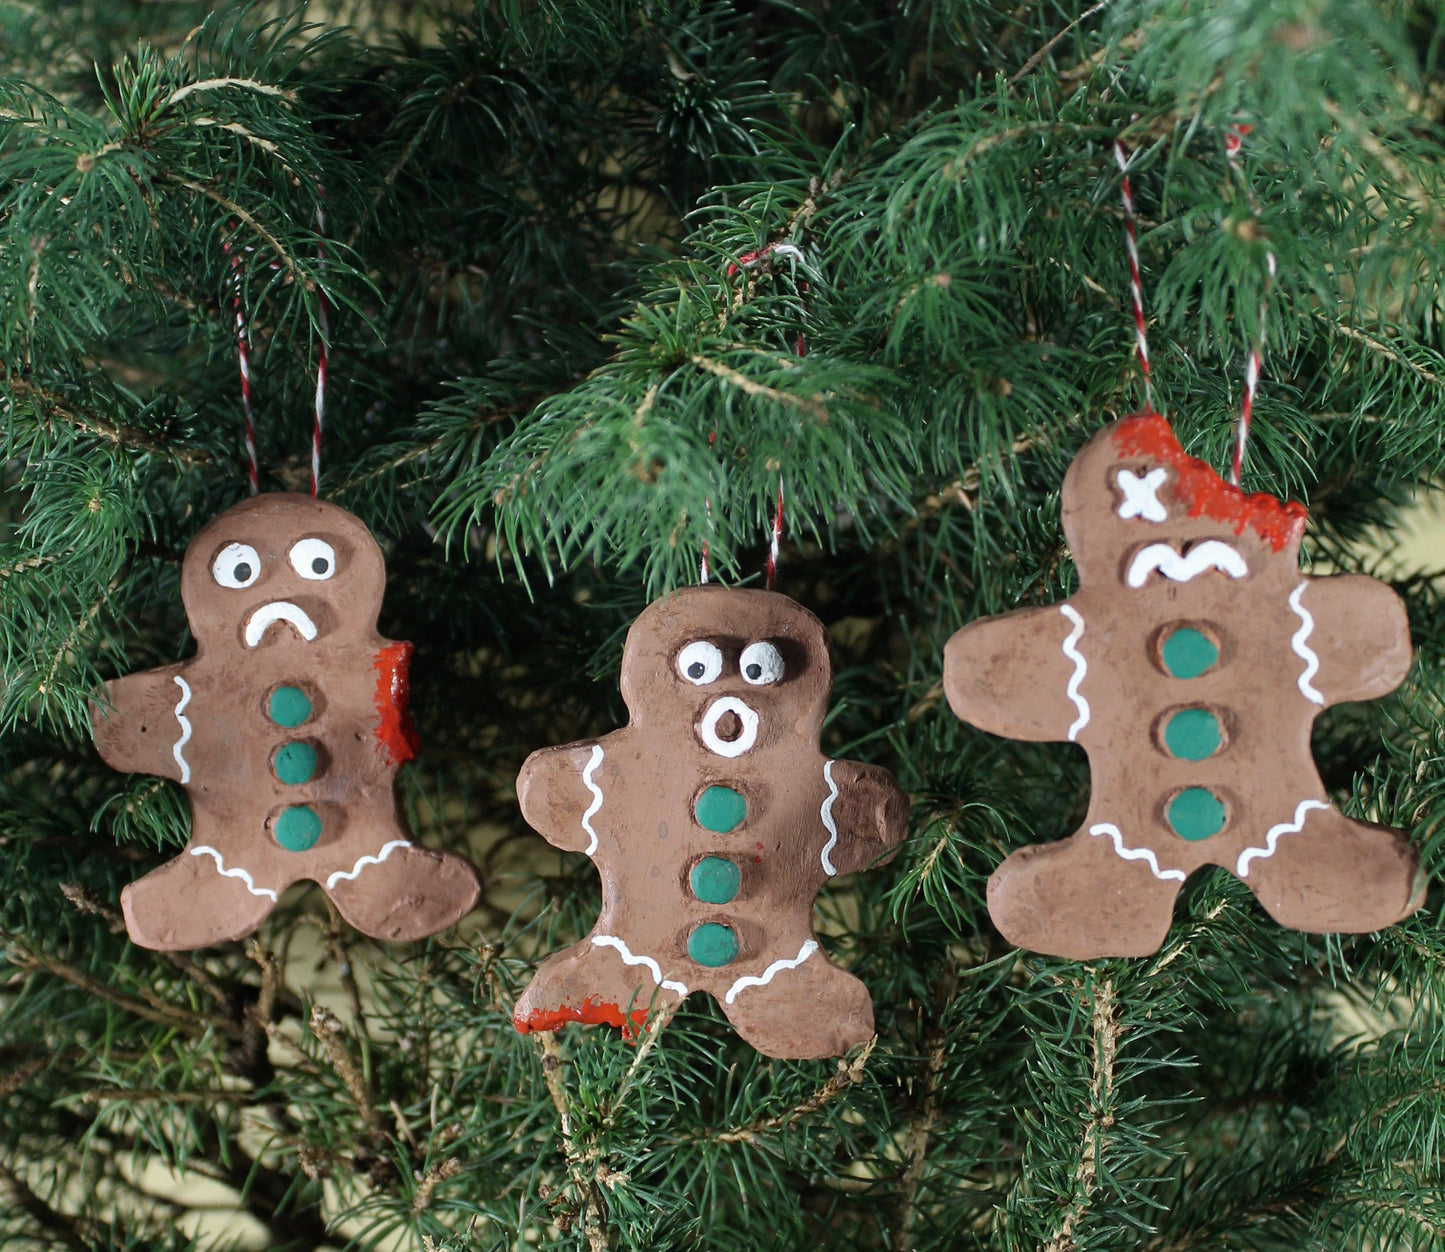 Ginger-Dead Men - Missing Foot (Christmas Ornaments)